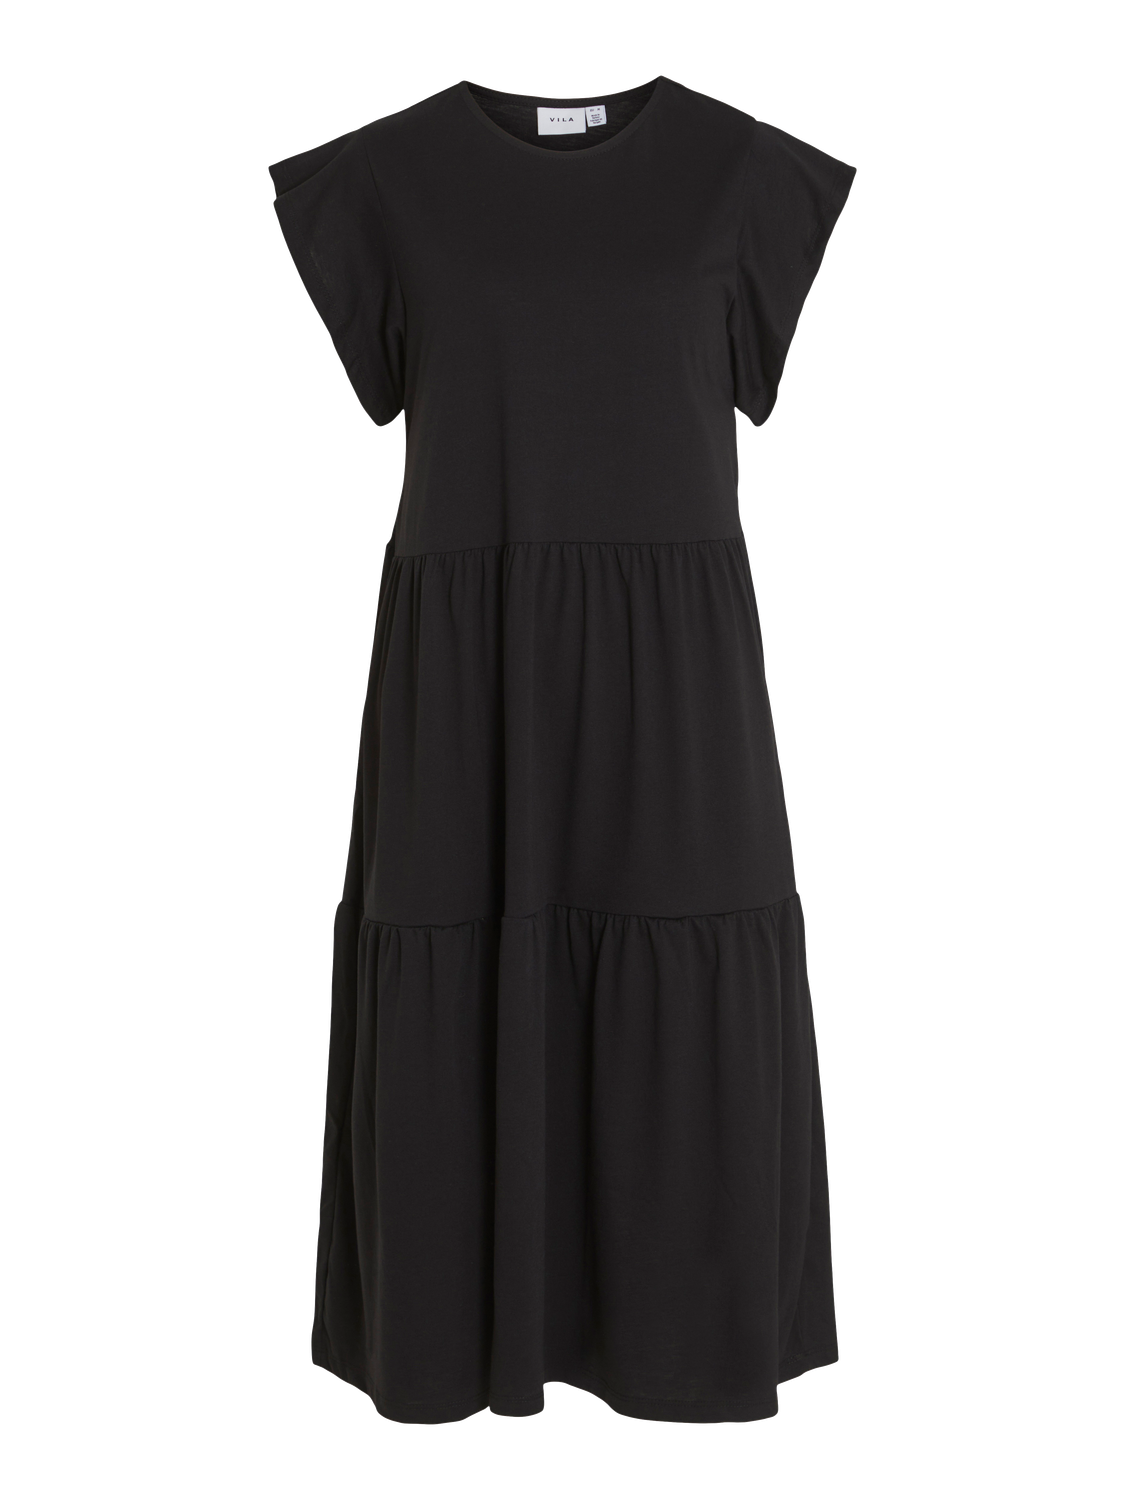 VISUMMER Dress - Black